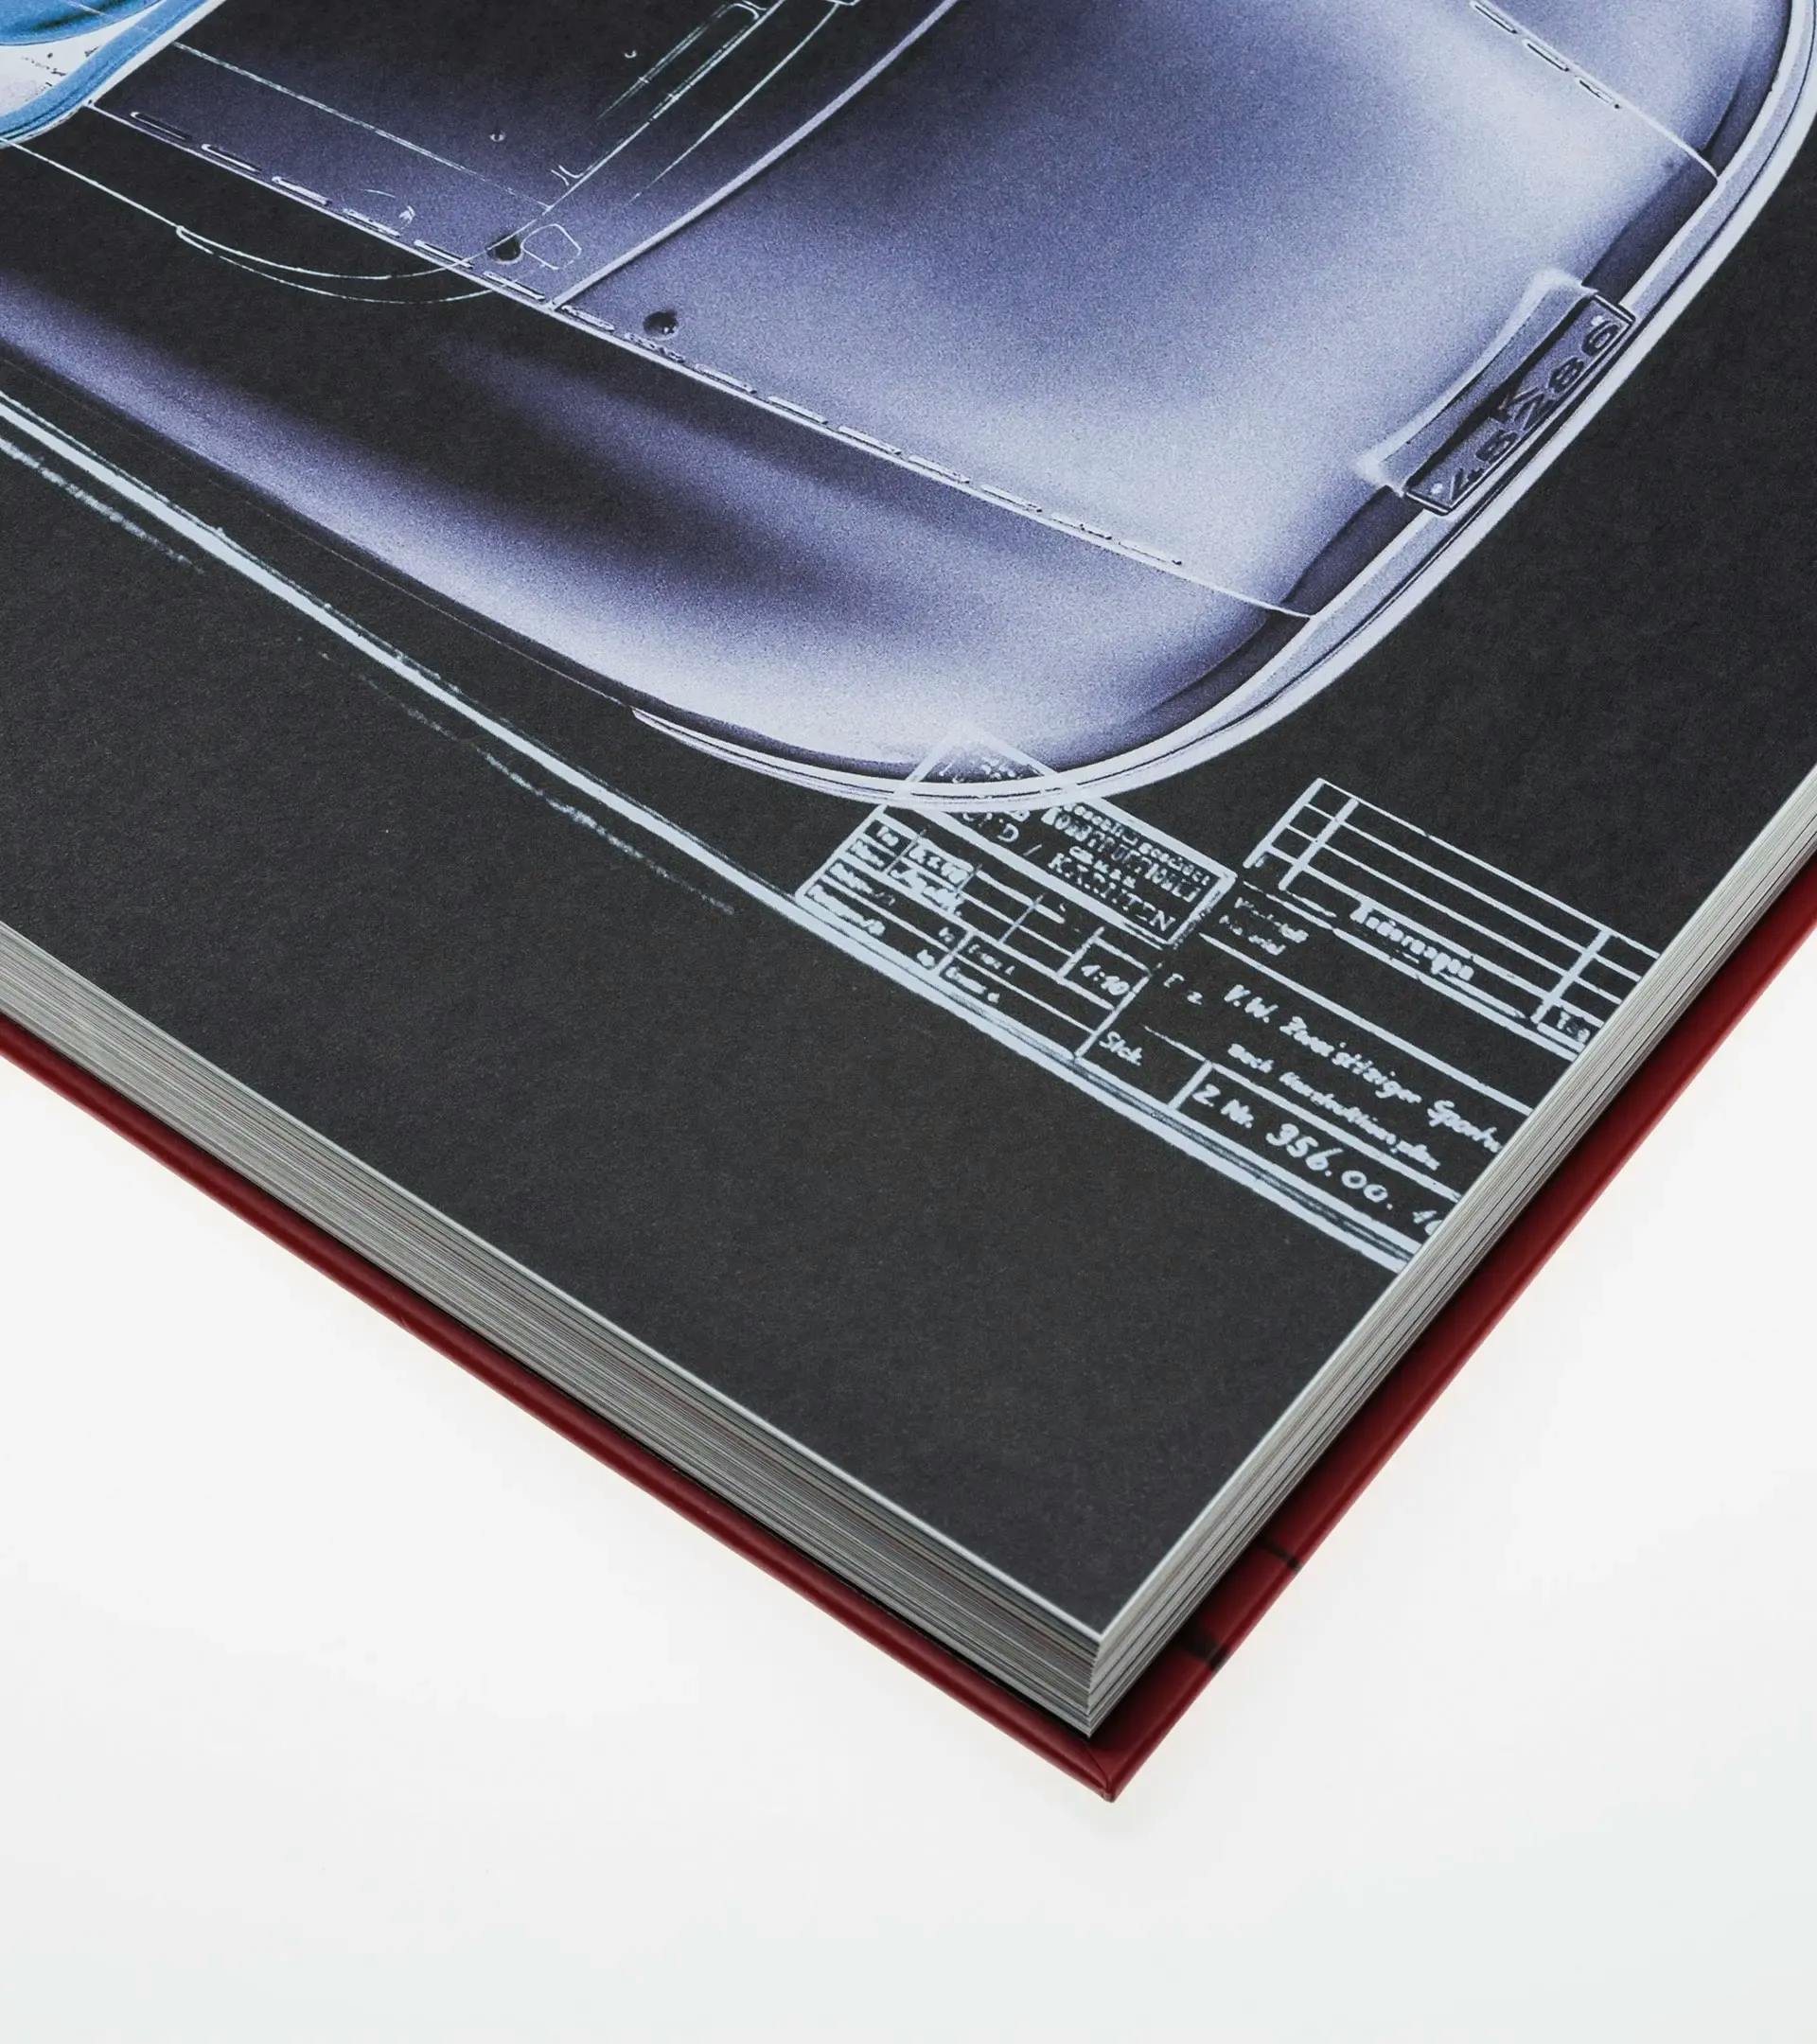 The Porsche Book - The Best Porsche Images by Frank M. Orel 2